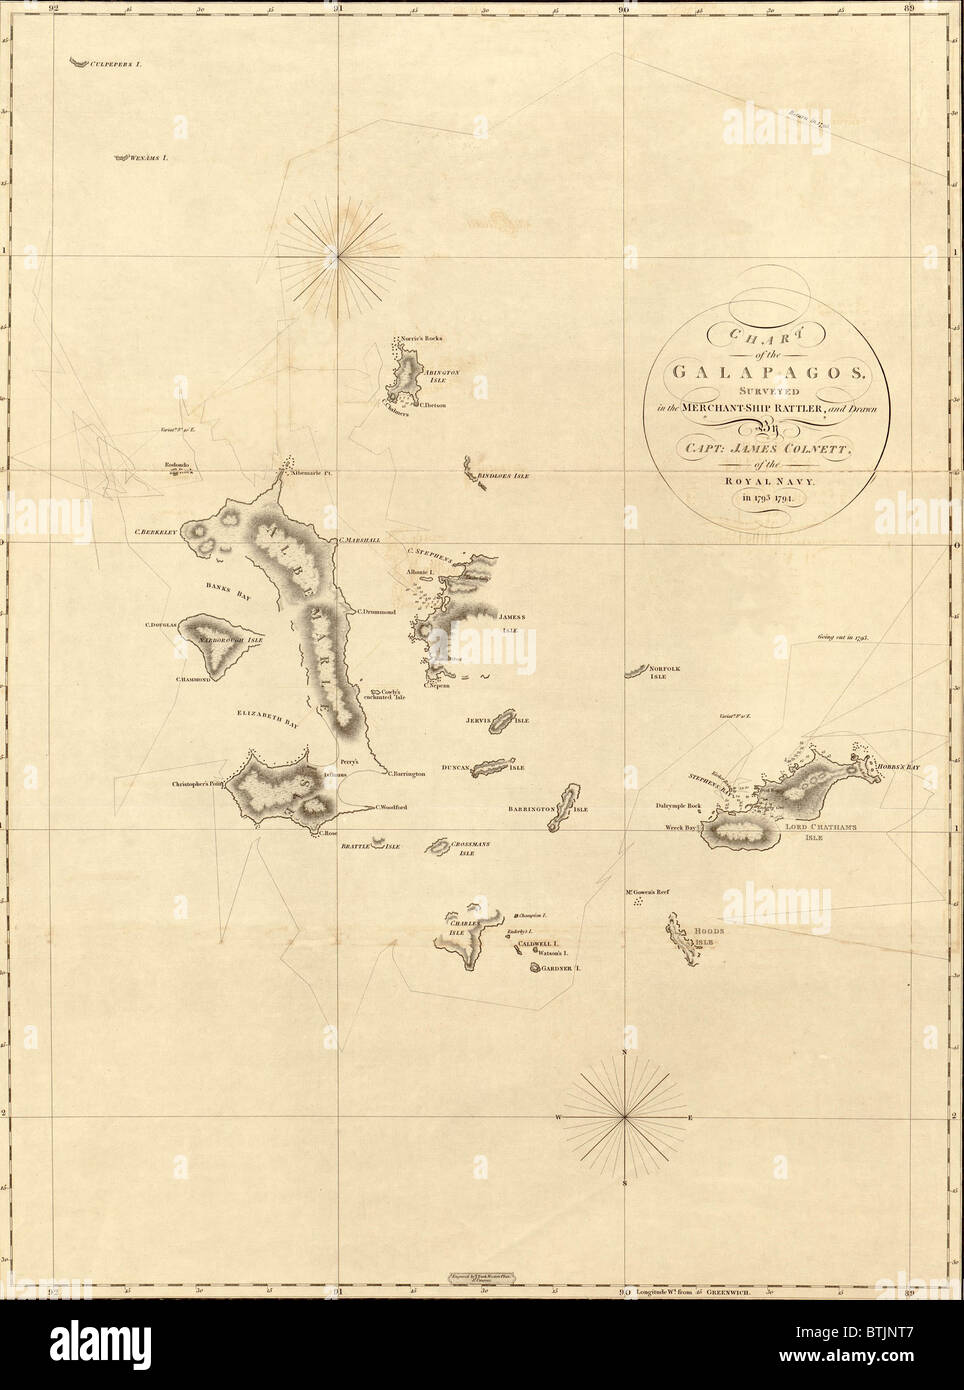 1798 mappa delle isole Galapagos nell'Oceano Pacifico Foto Stock